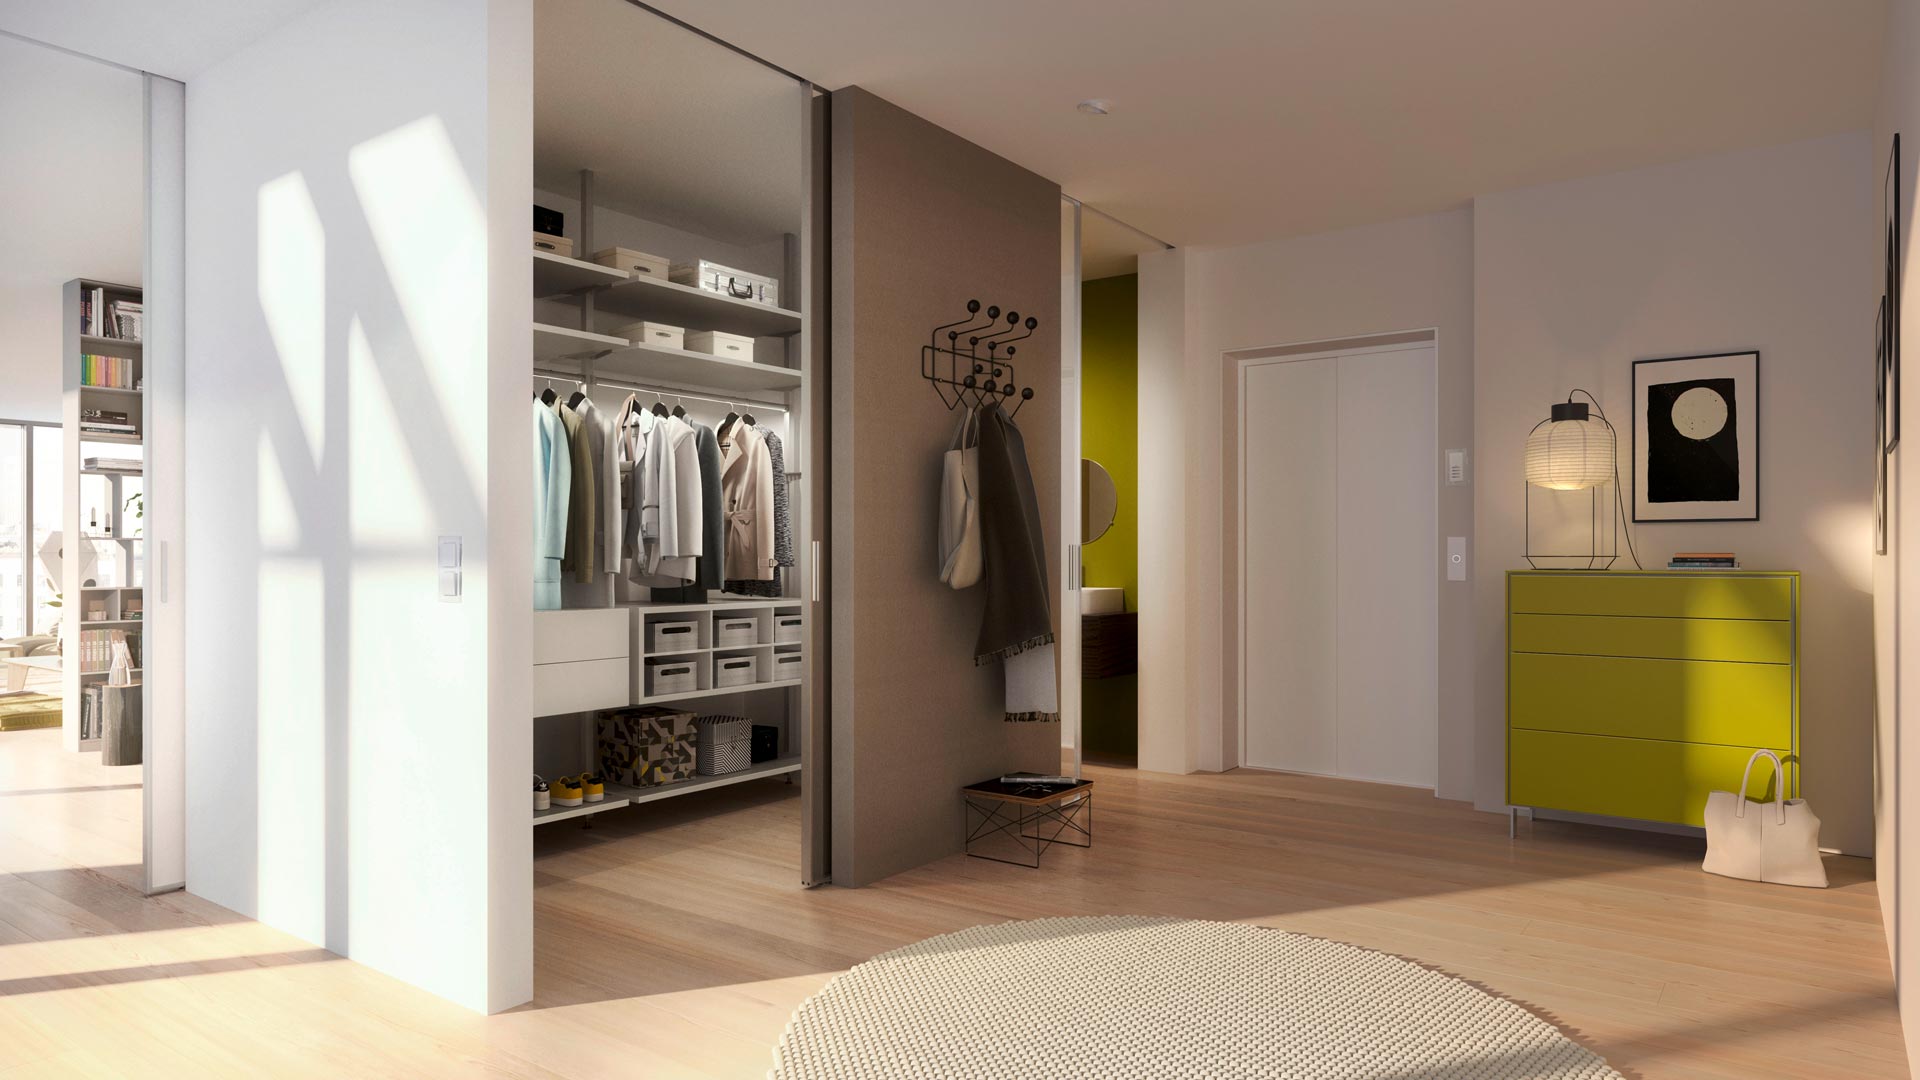 Smart interior choice – a built-in closet with sliding doors